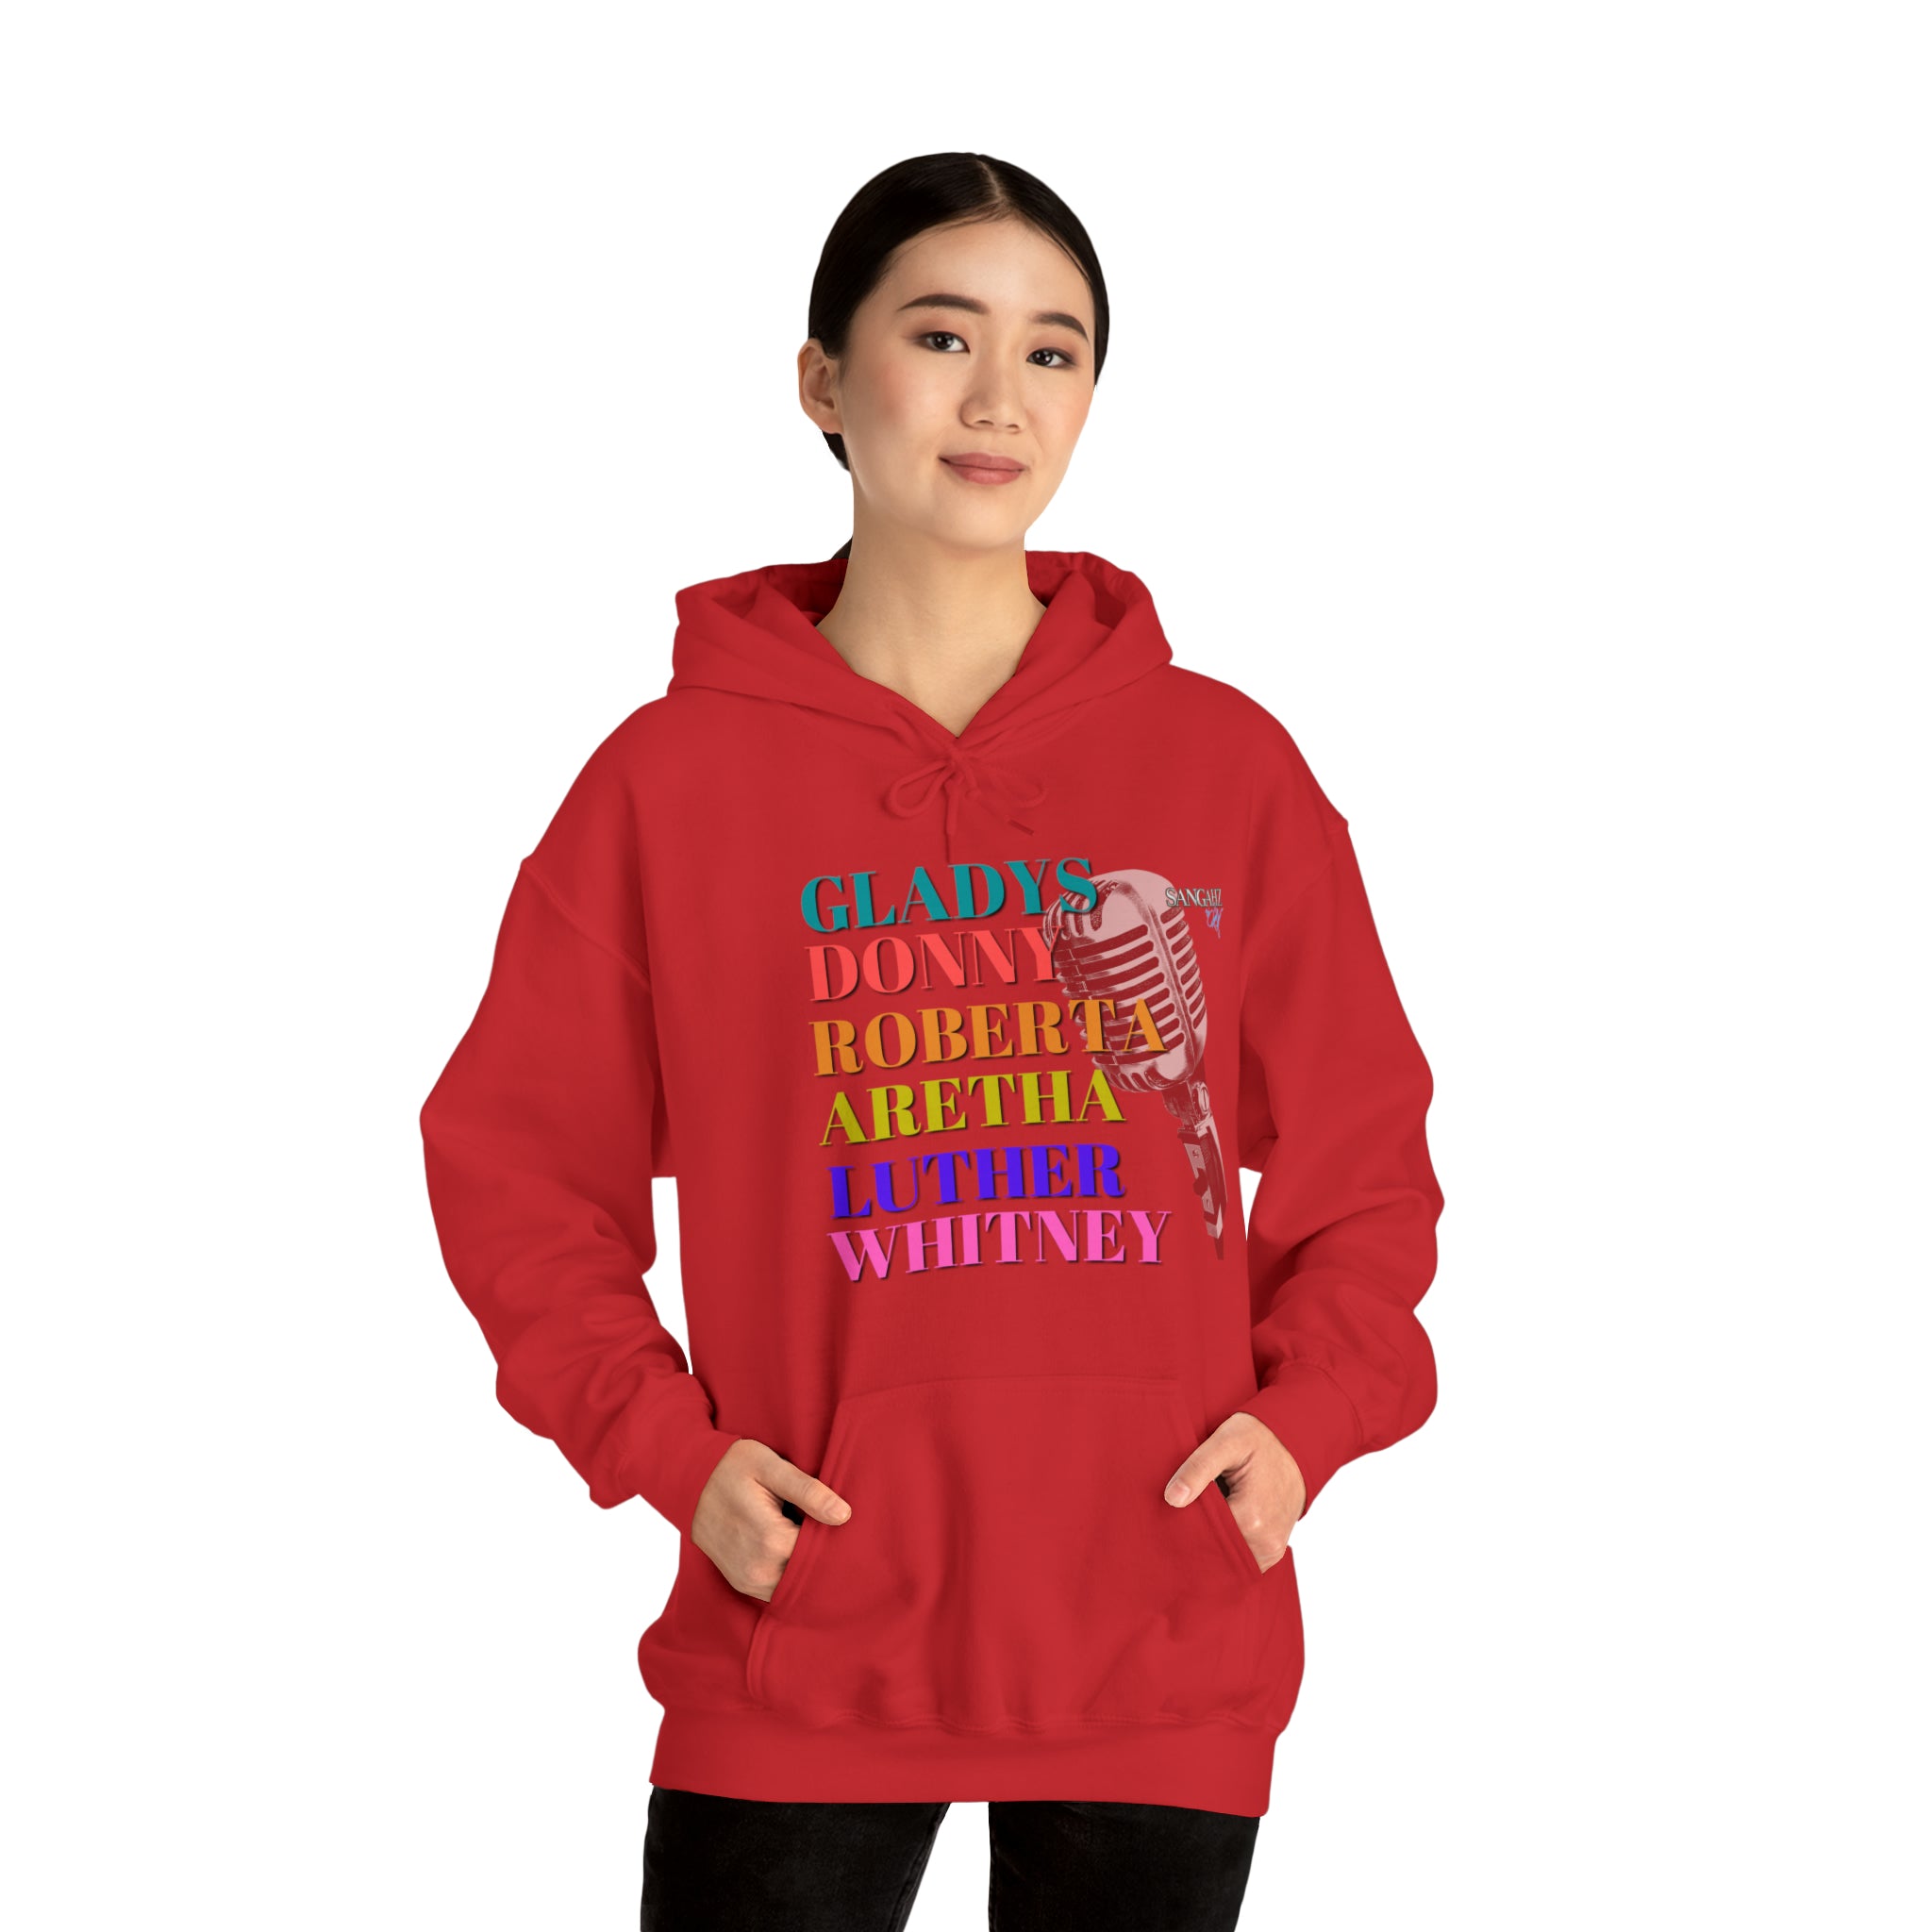 R&B ROYALTY SANGAHZ™ Hooded Sweatshirt